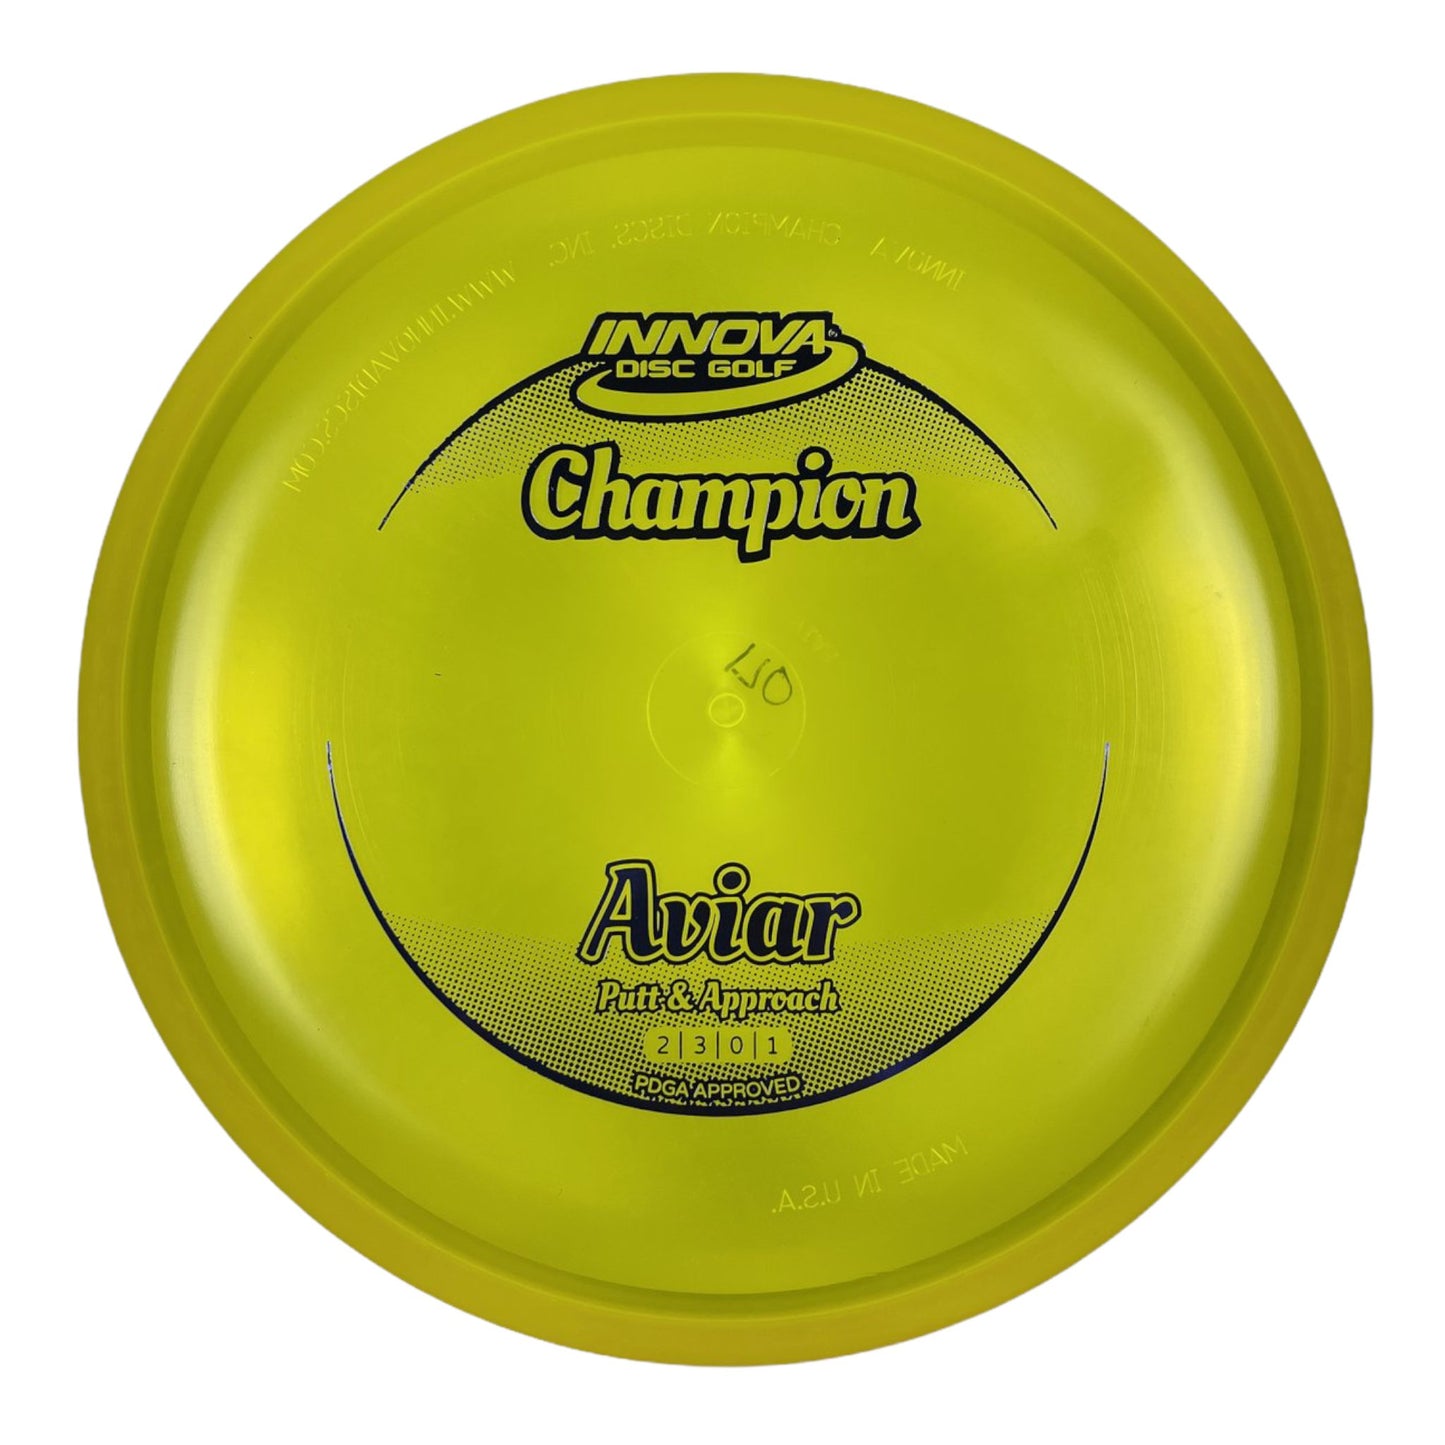 Innova Champion Discs Aviar | Champion | Yellow/Blue 170g Disc Golf